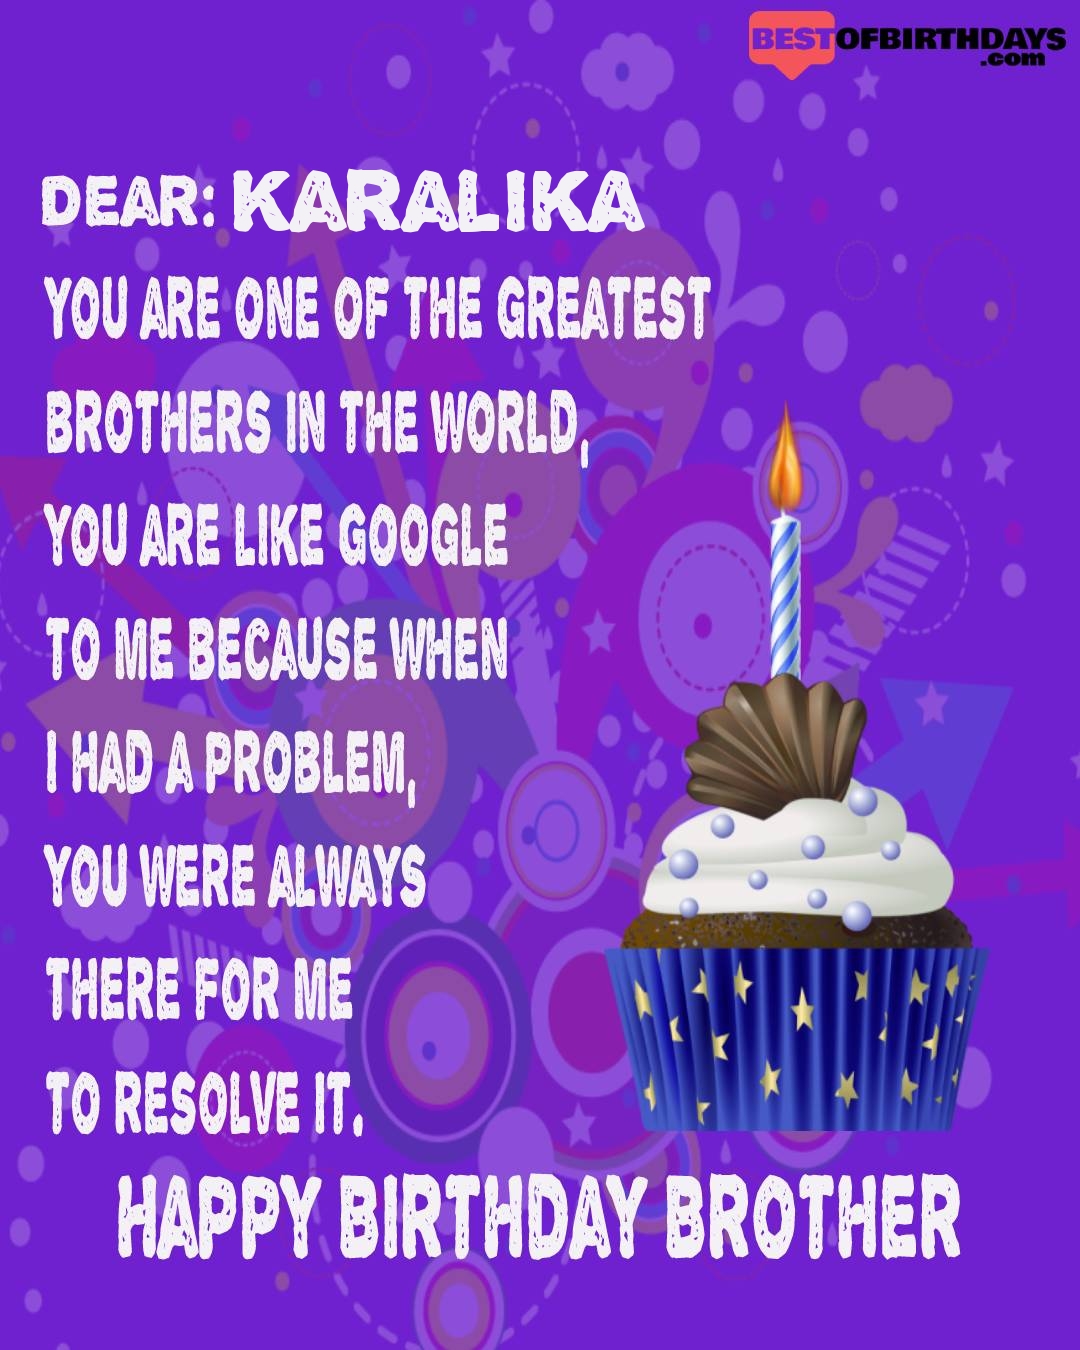 Happy birthday karalika bhai brother bro